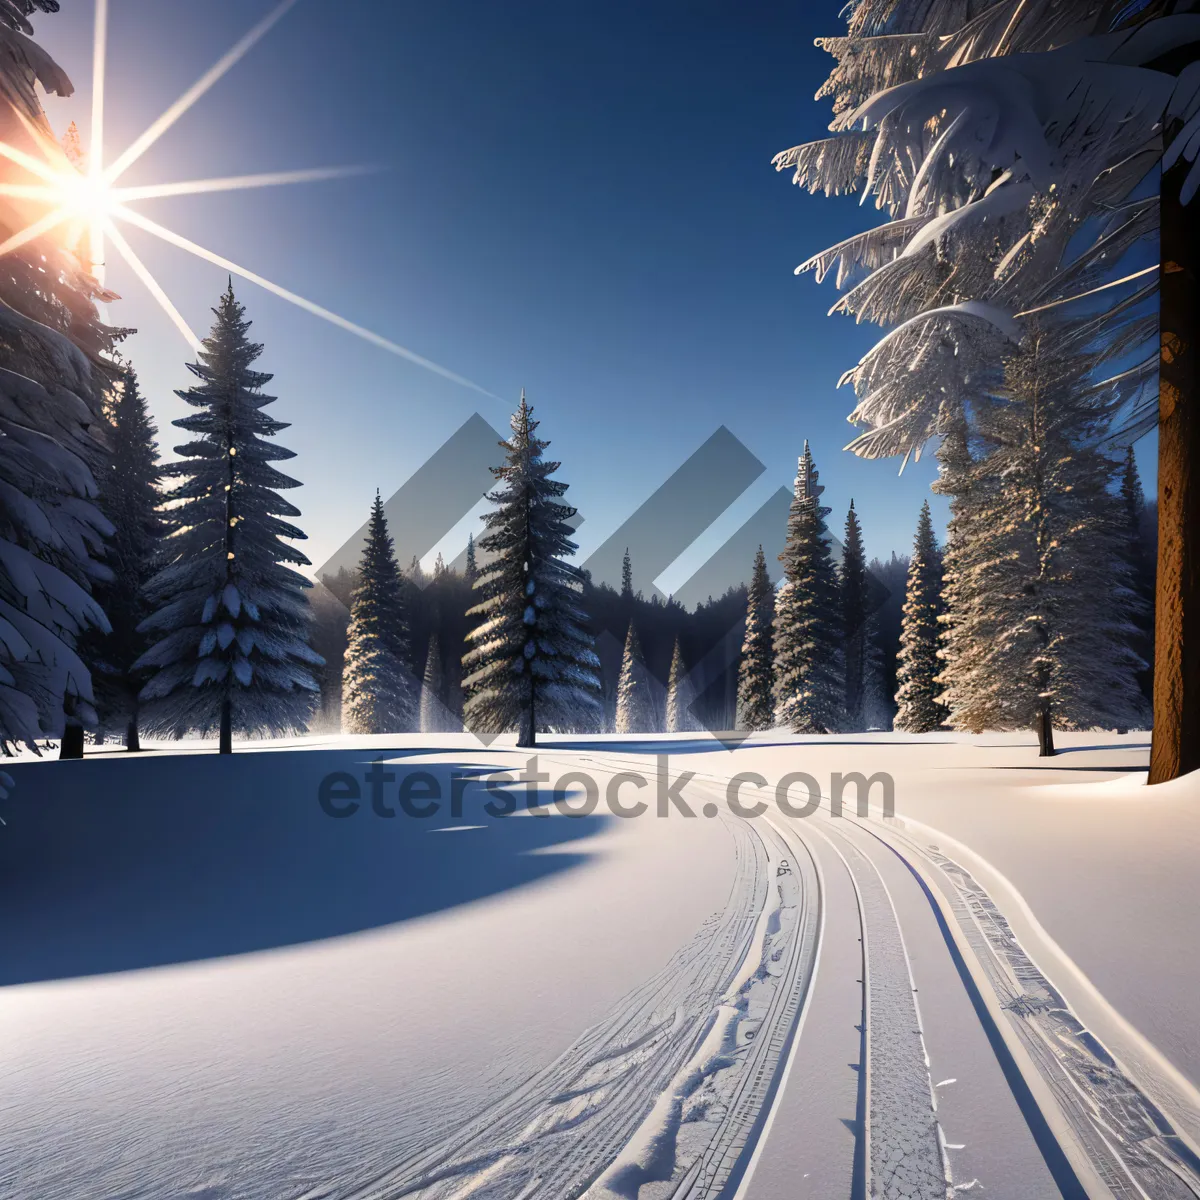 Picture of Winter Wonderland: Snowy Mountain Landscape